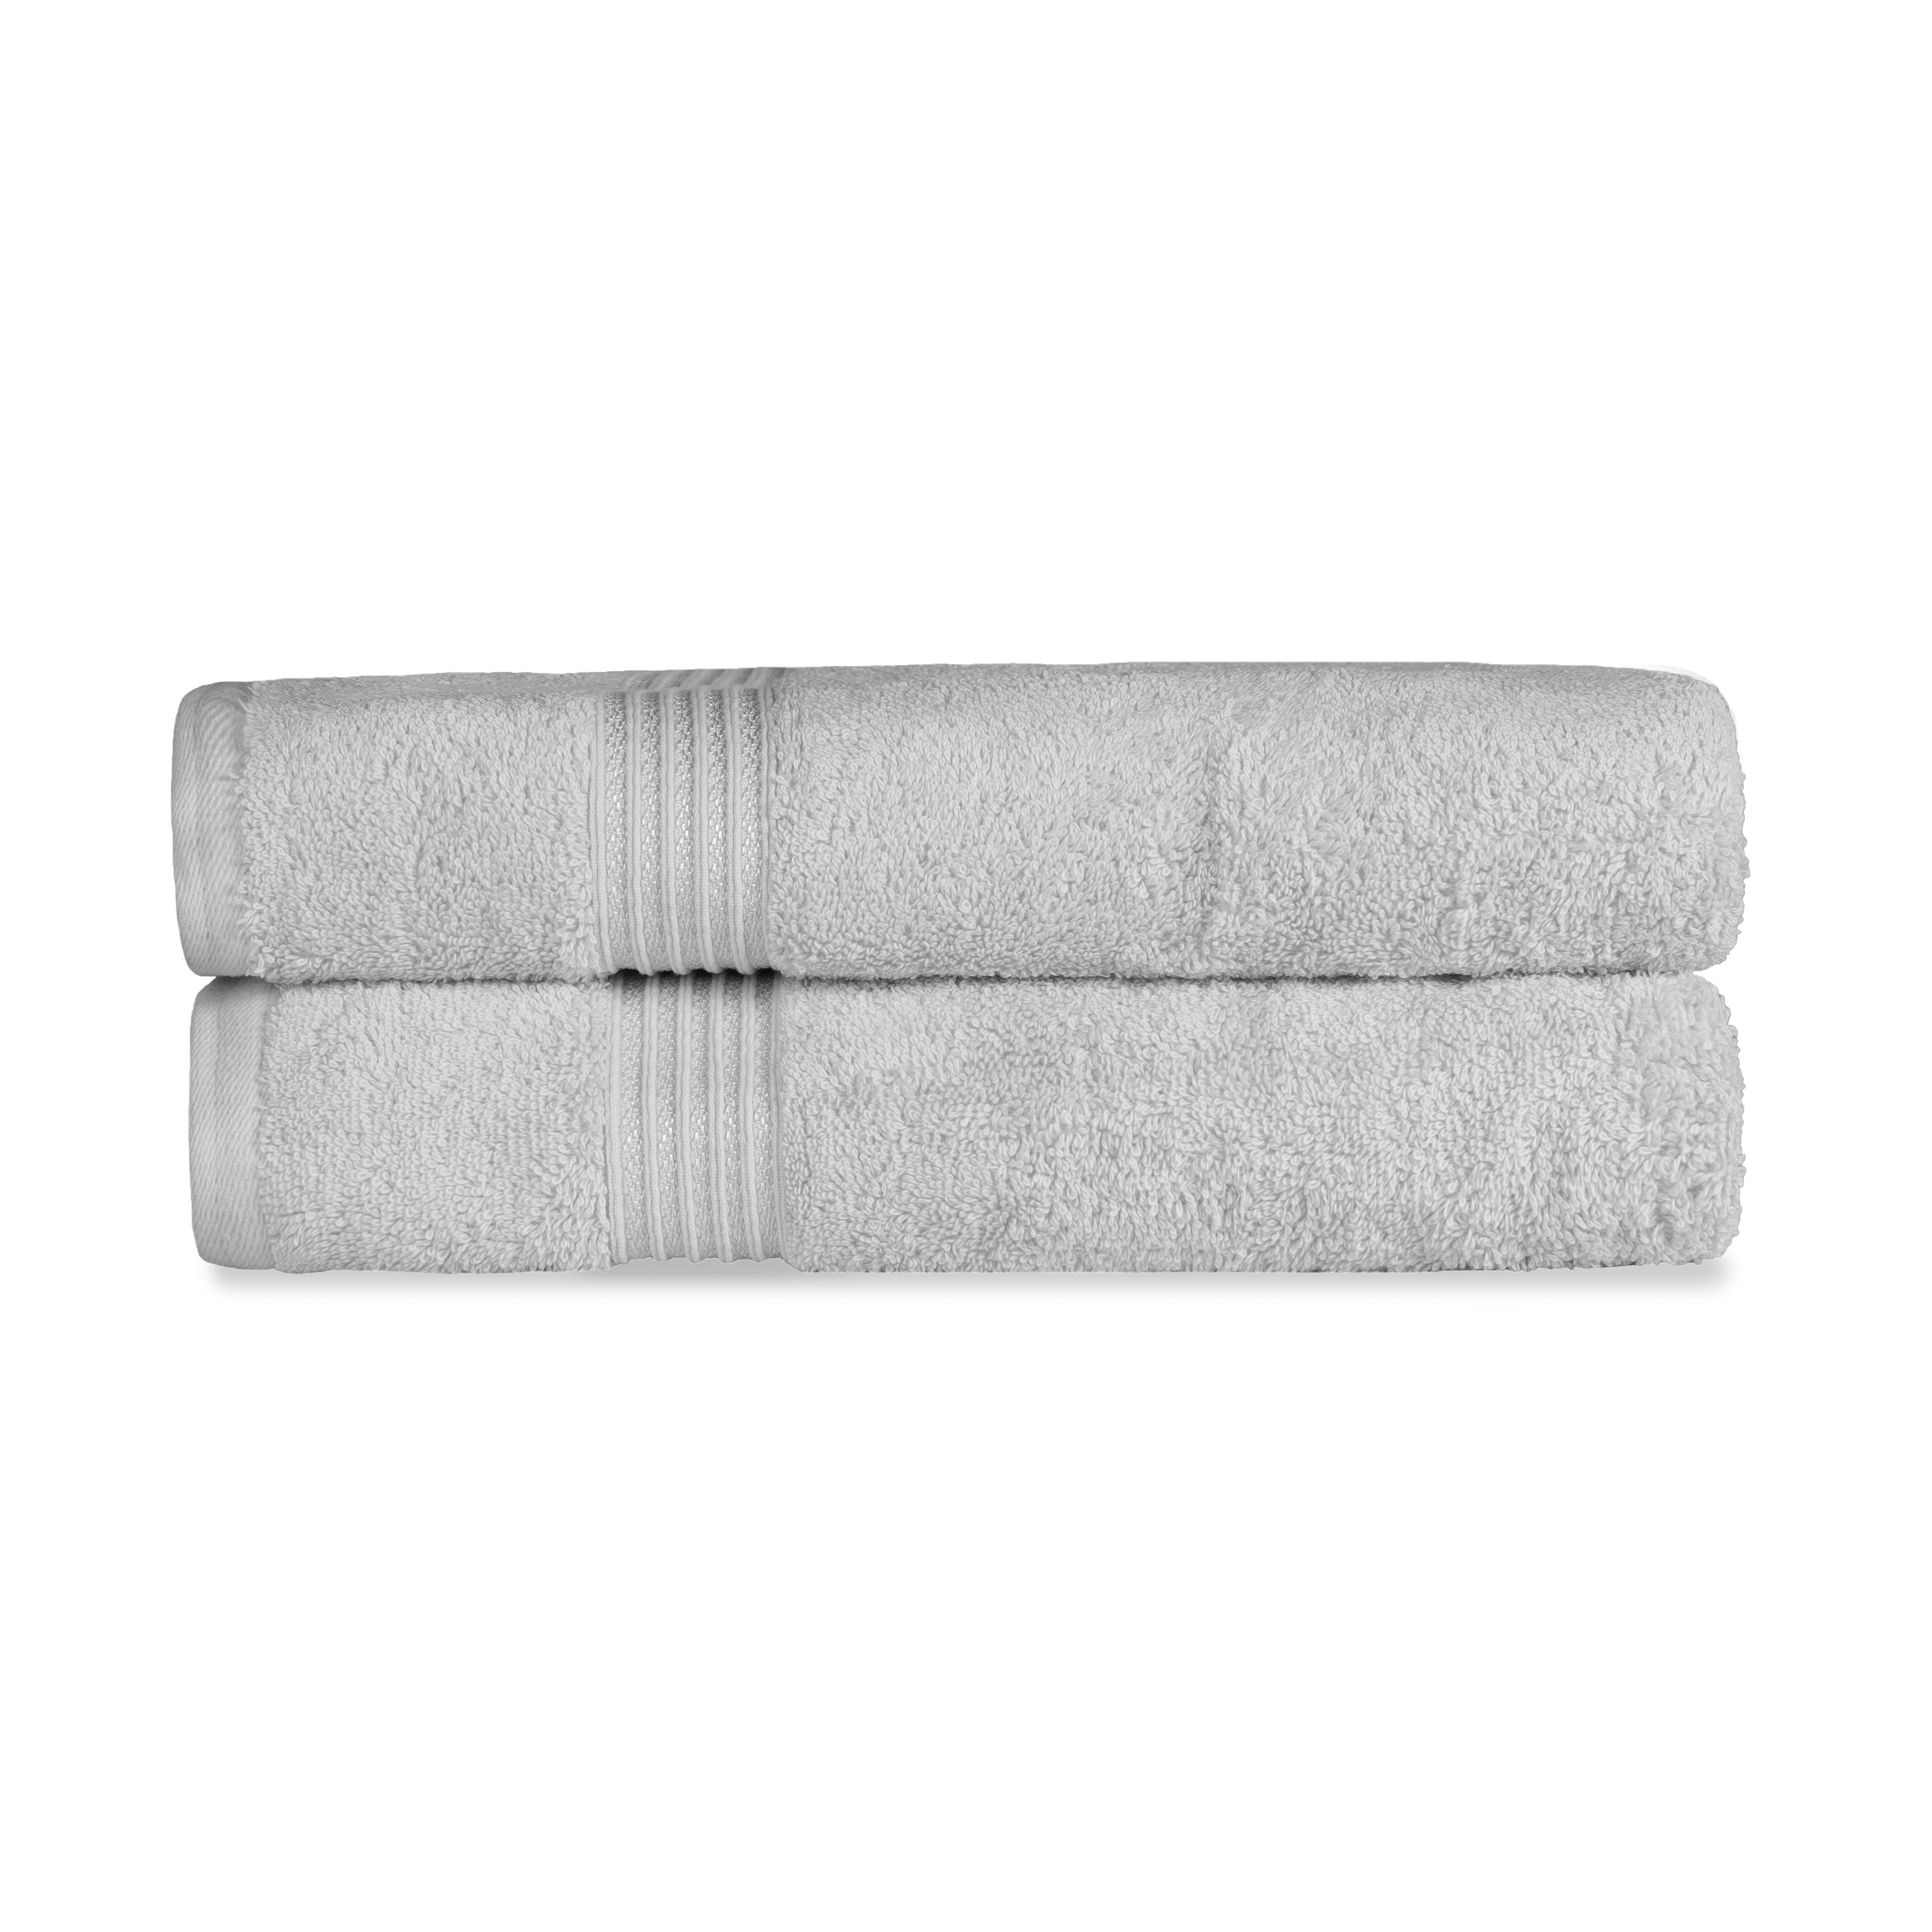 4X Extra Large Jumbo Bath Sheets 100% Premium Egyptian Cotton Soft